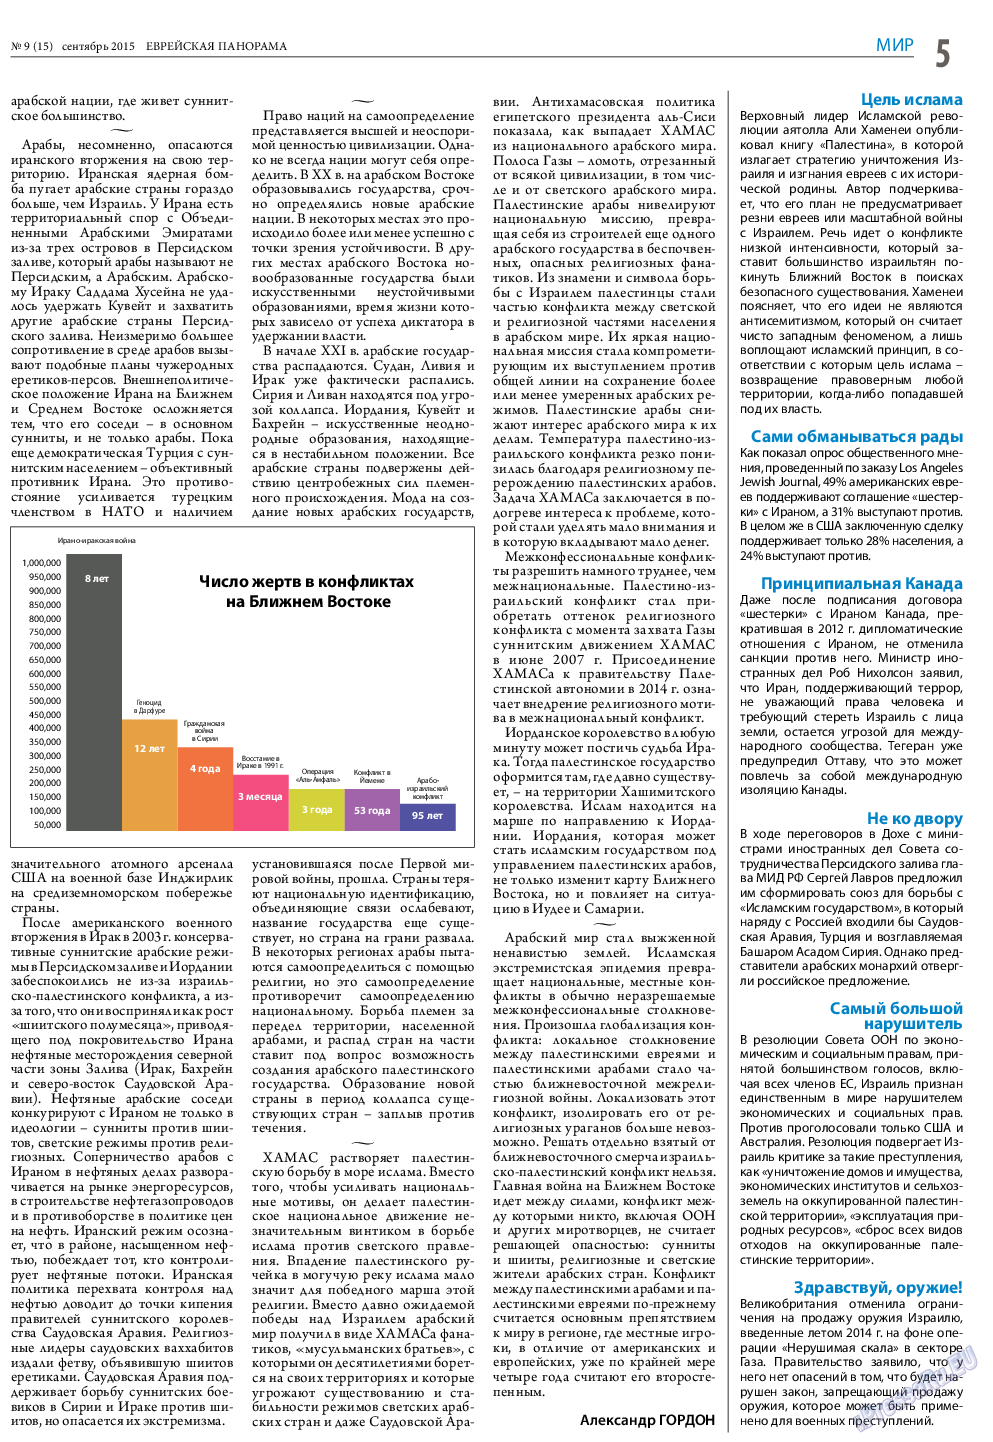 Еврейская панорама, газета. 2015 №9 стр.5